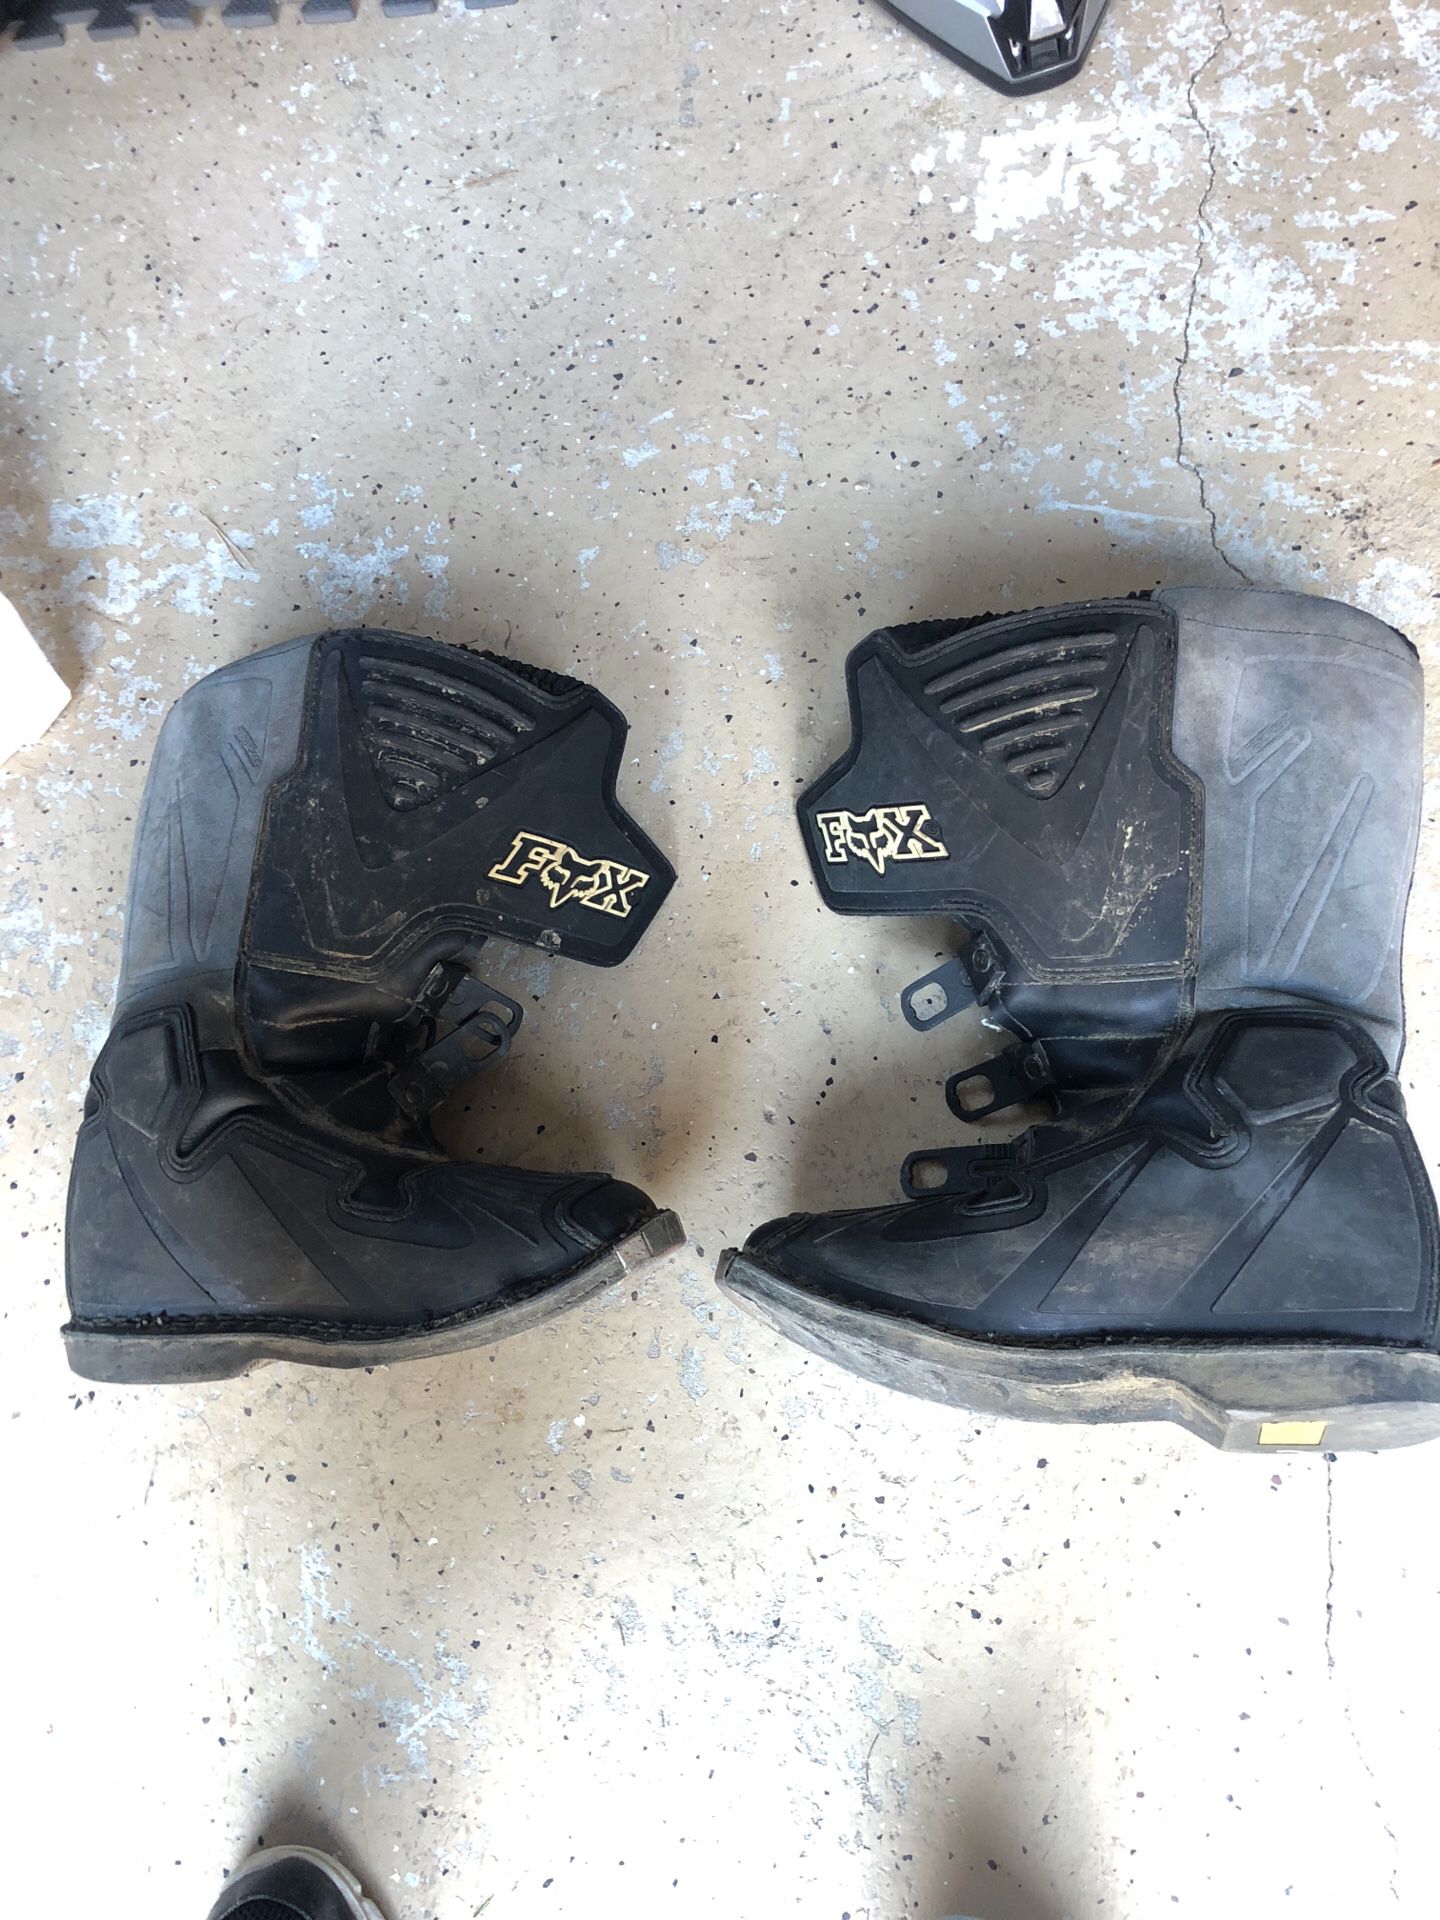 Fox racing dirt bike boots size 12